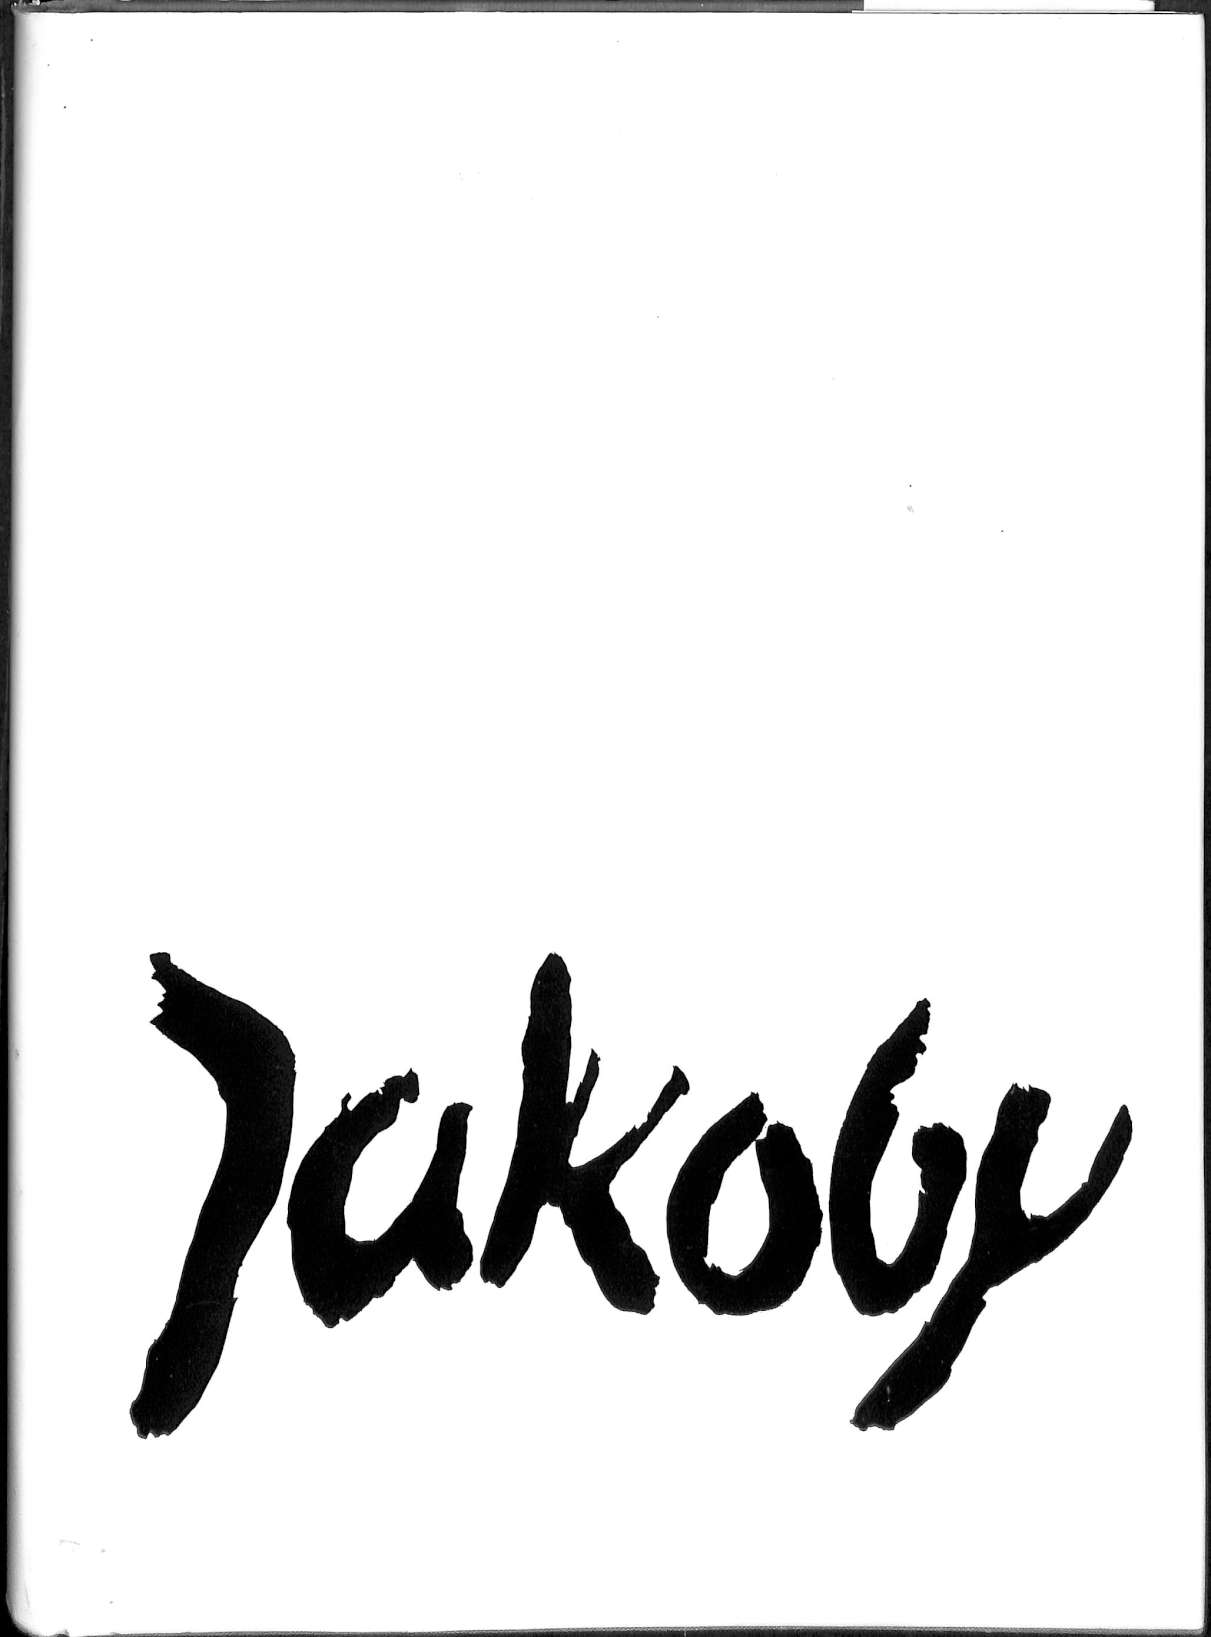 Jlius Jakoby (1903-1985)